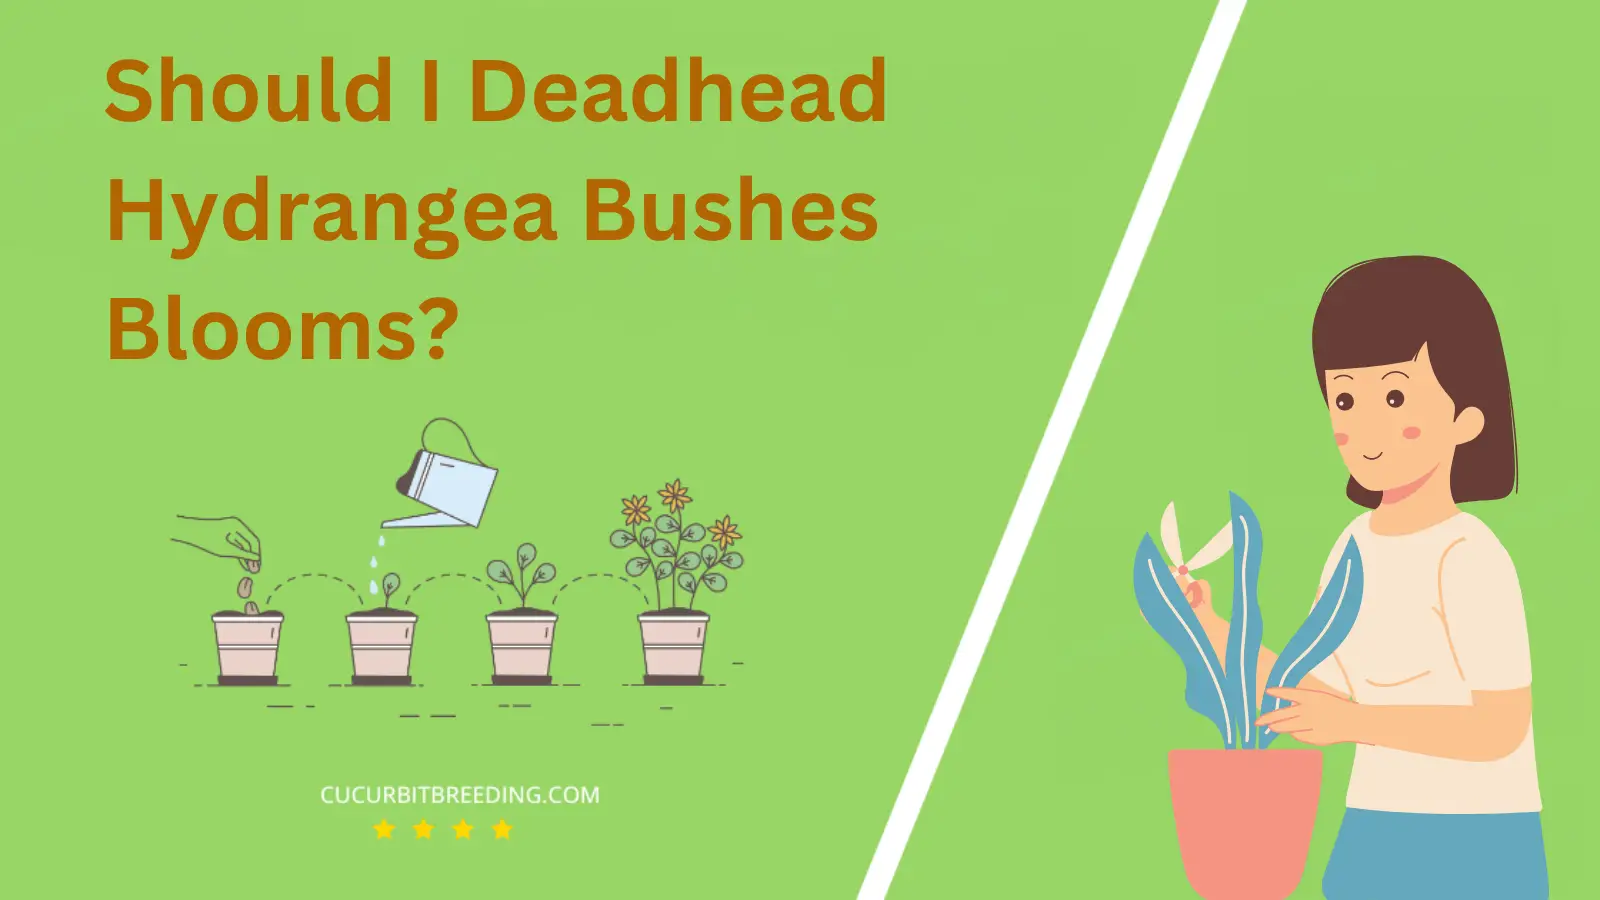 Should I Deadhead Hydrangea Bushes Blooms?